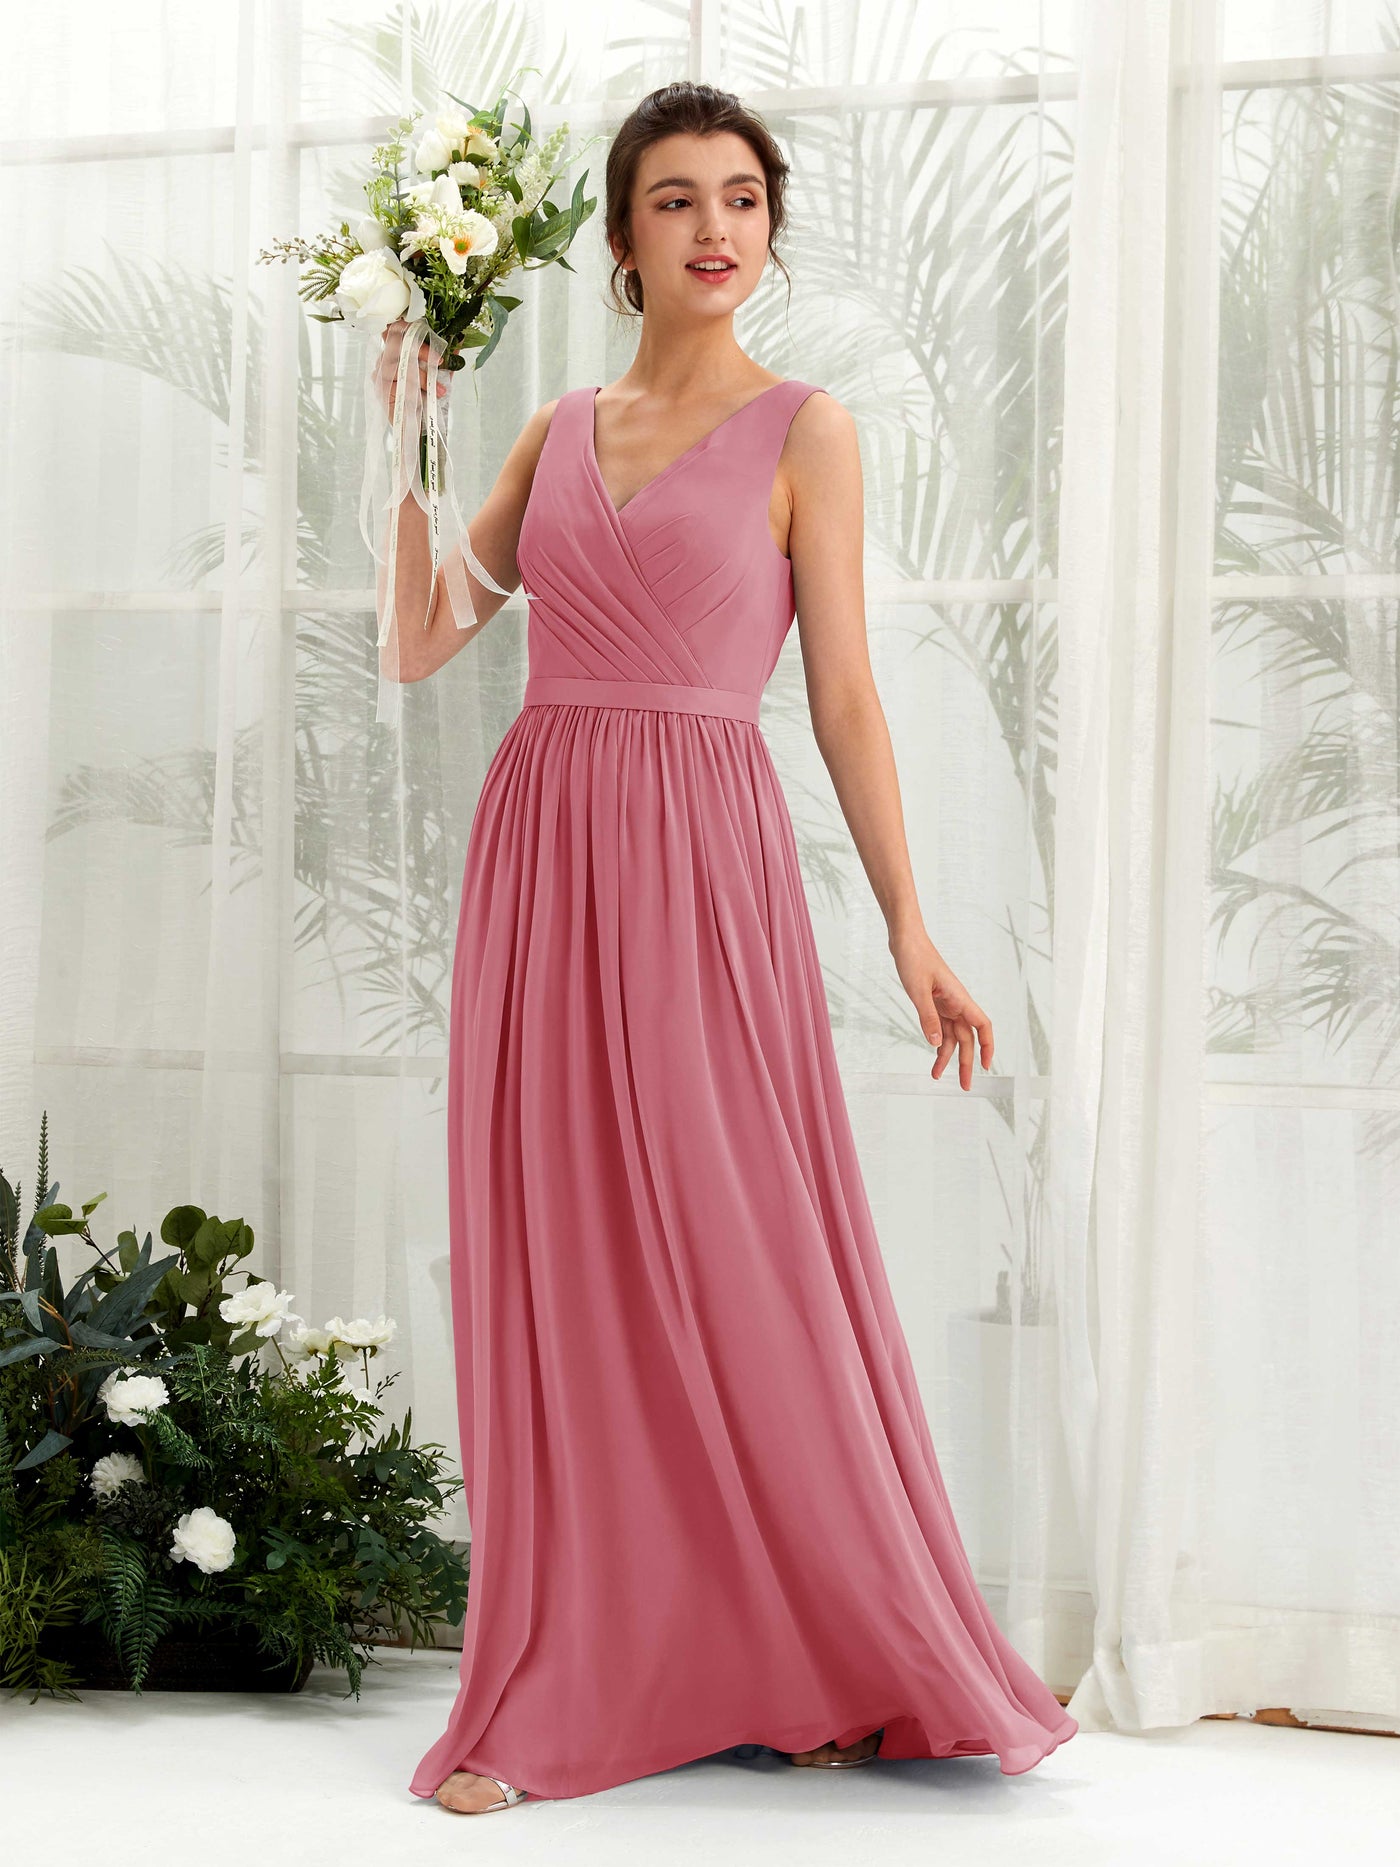 Desert Rose Bridesmaid Dresses Bridesmaid Dress A-line Chiffon V-neck Full Length Sleeveless Wedding Party Dress (81223611)#color_desert-rose